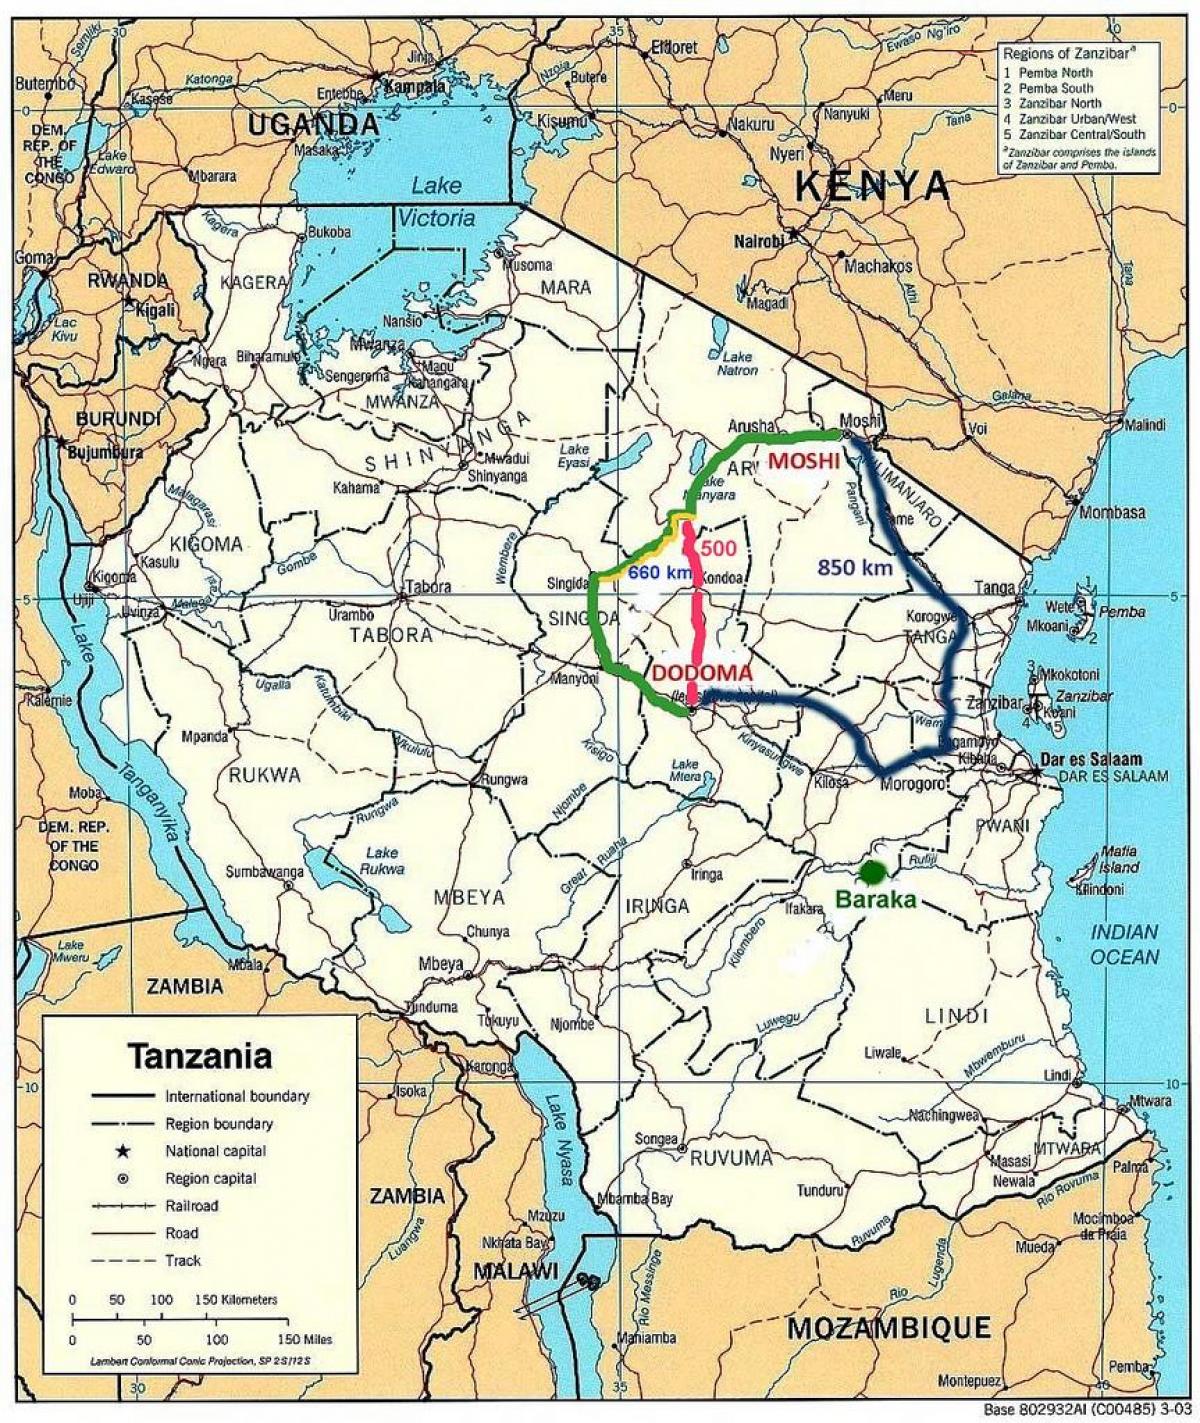 tanzania rede viaria mapa